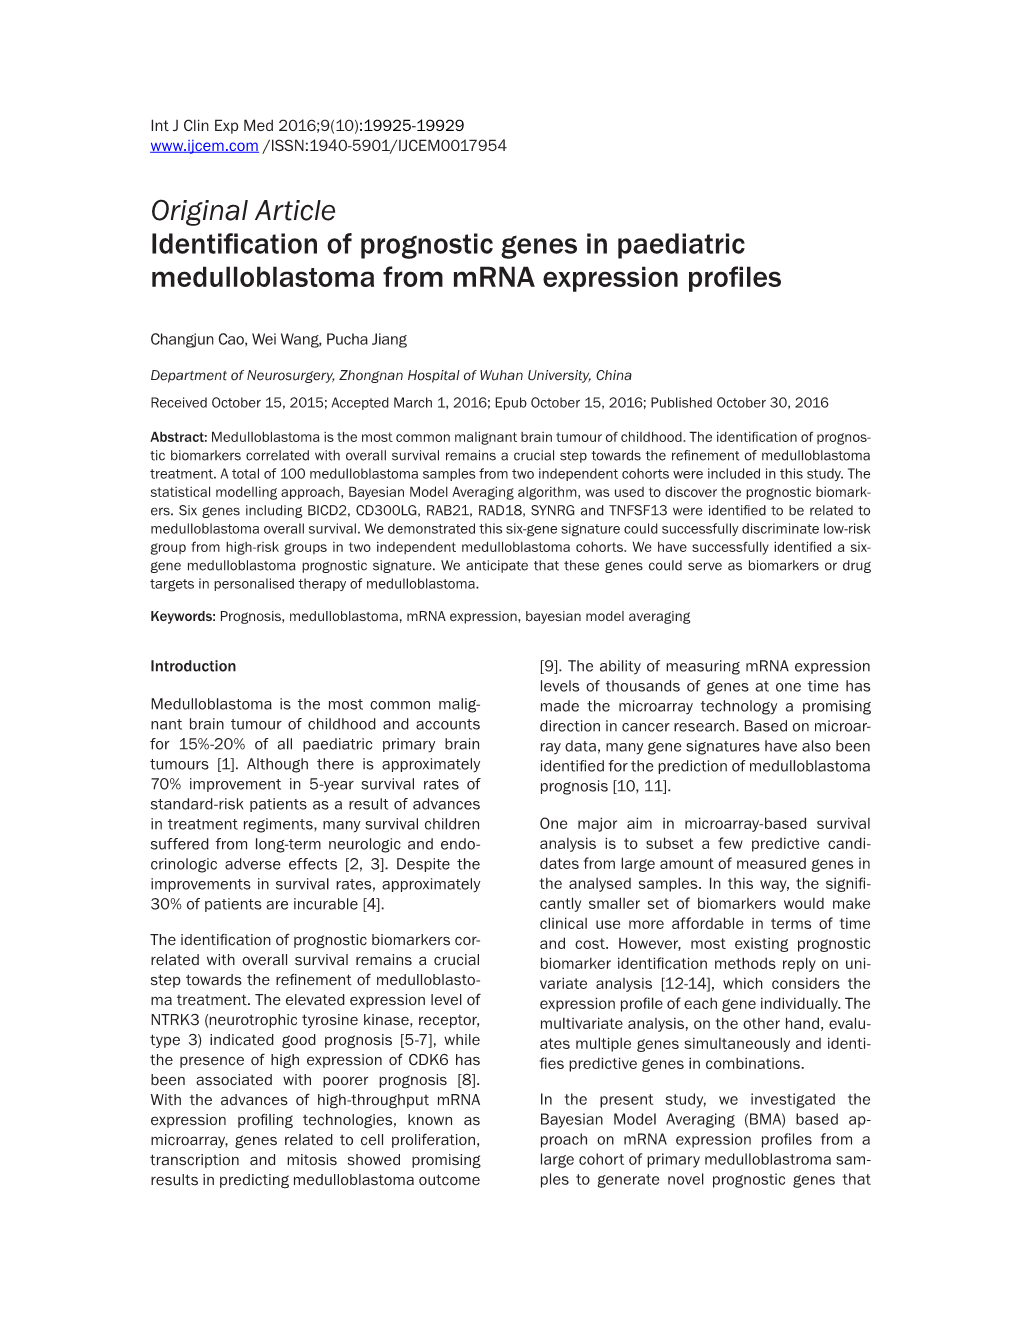 Original Article Identification of Prognostic Genes in Paediatric Medulloblastoma from Mrna Expression Profiles